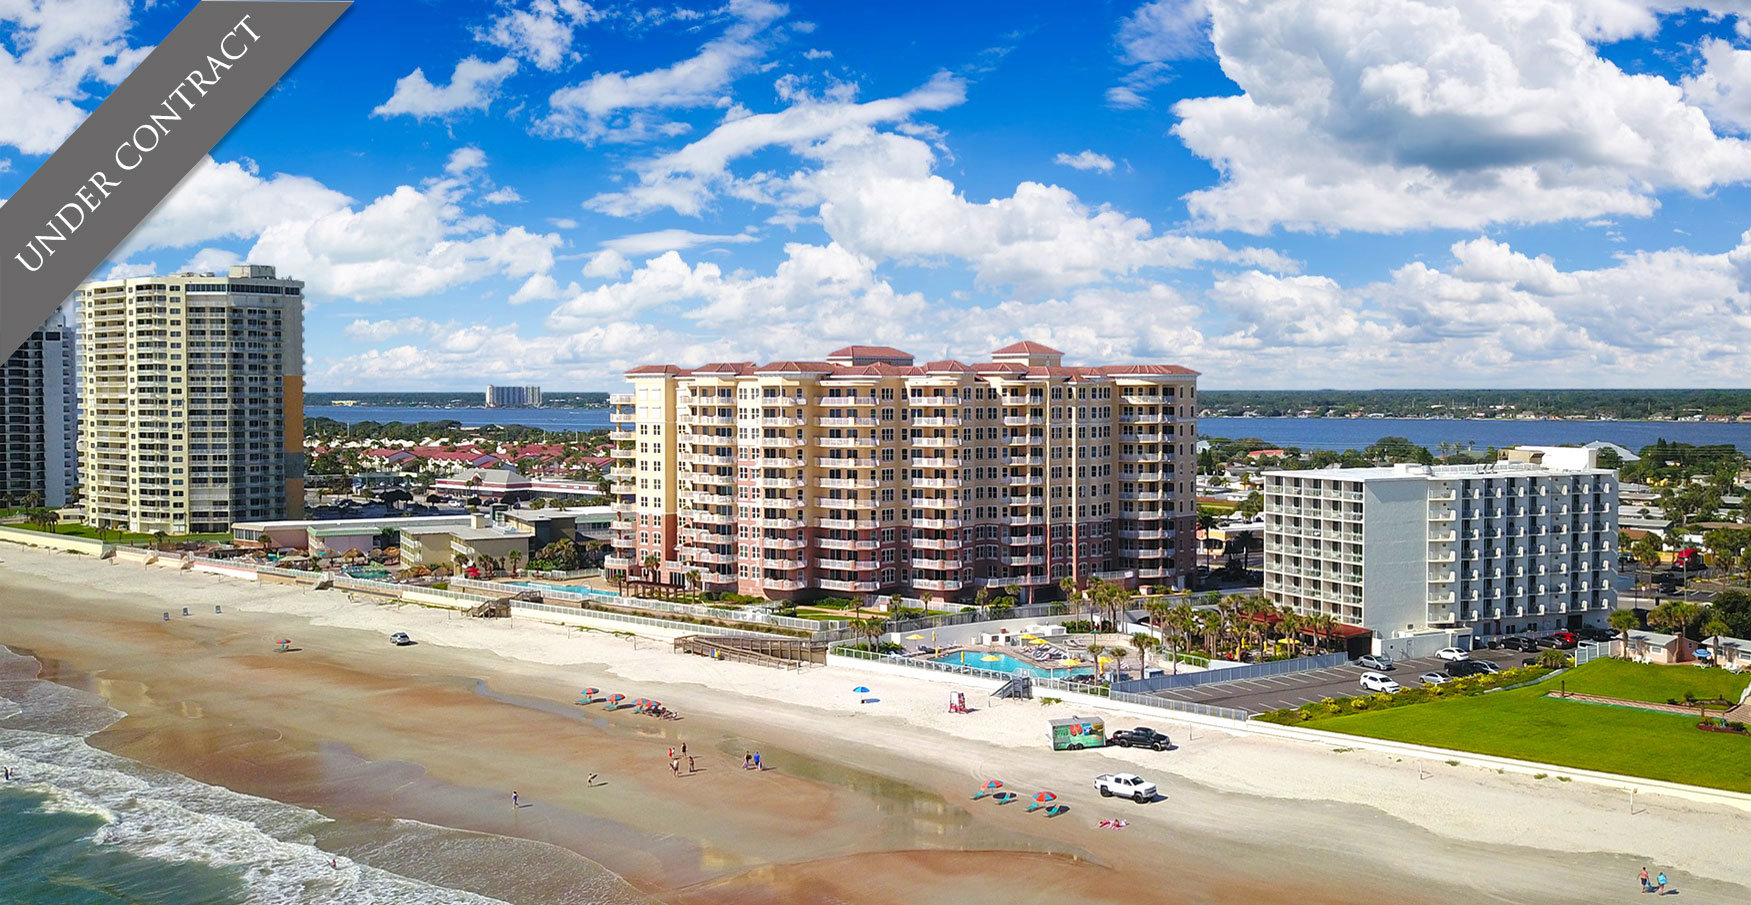 Bella Vista oceanfront condos For Sale at 2515 S Atlantic Ave Daytona Beach  Shores The LUXE Group 386-299-4043